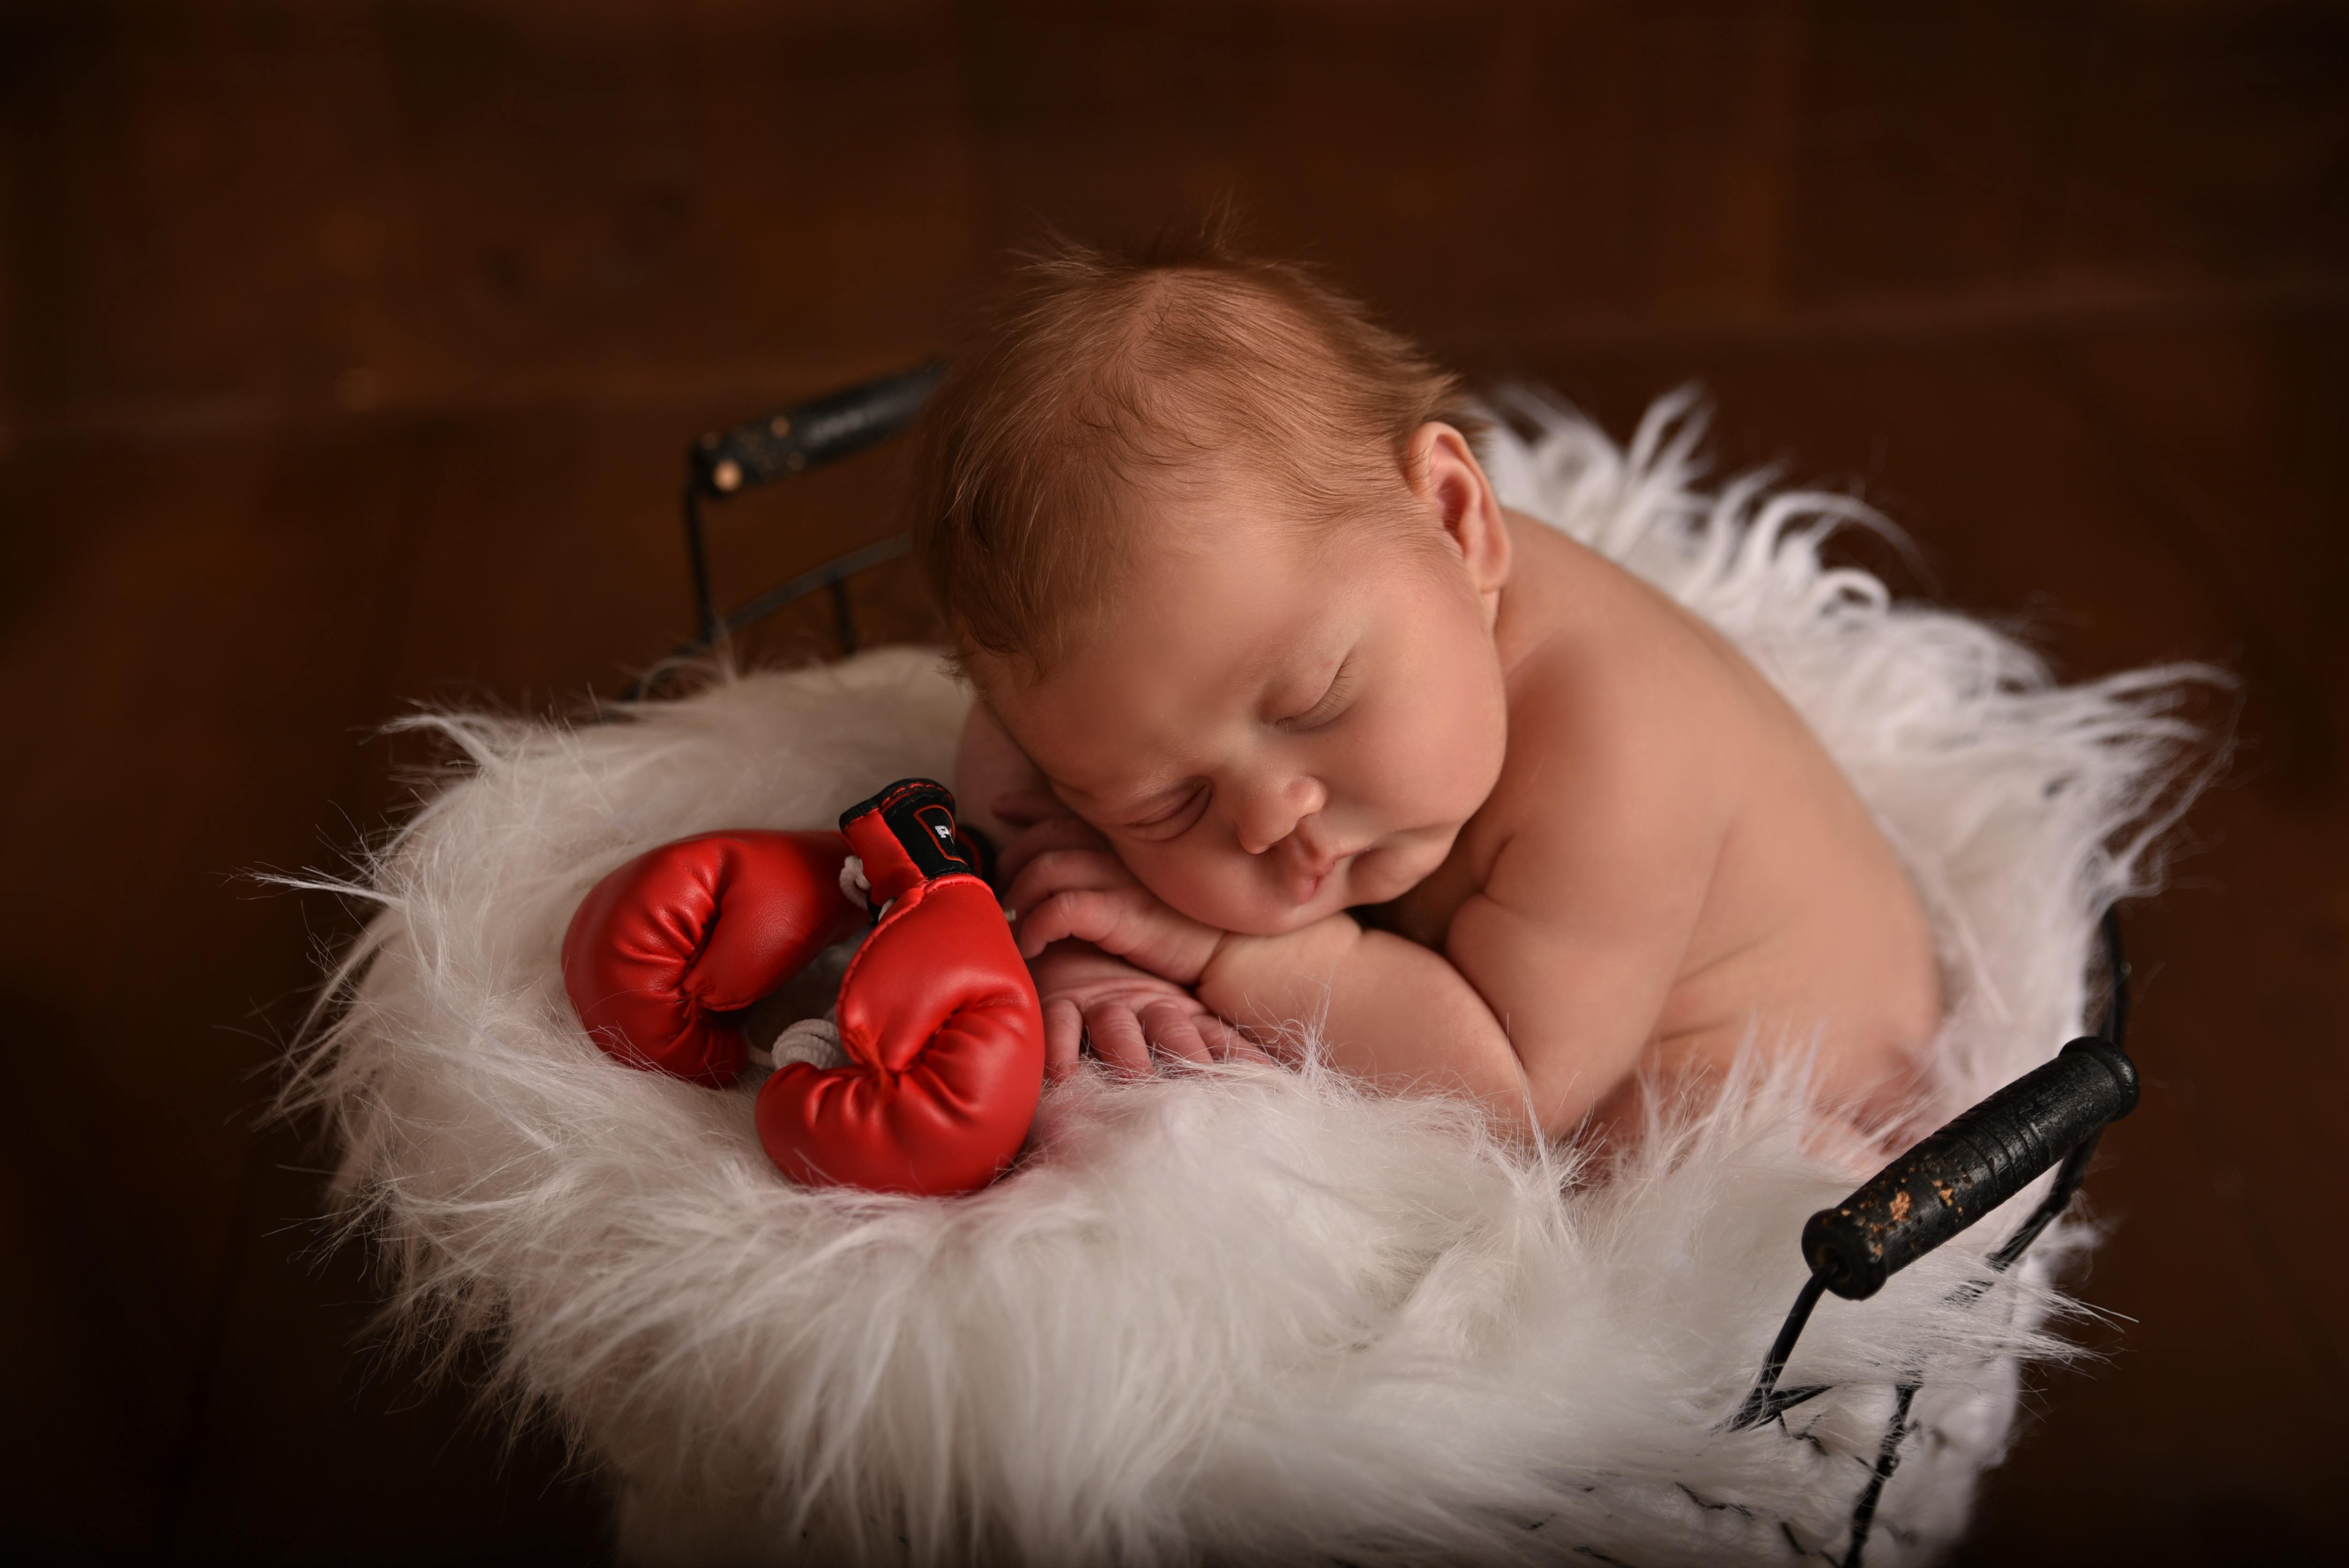 Newborn Photographer 1 - Portfolio: Infant Photography